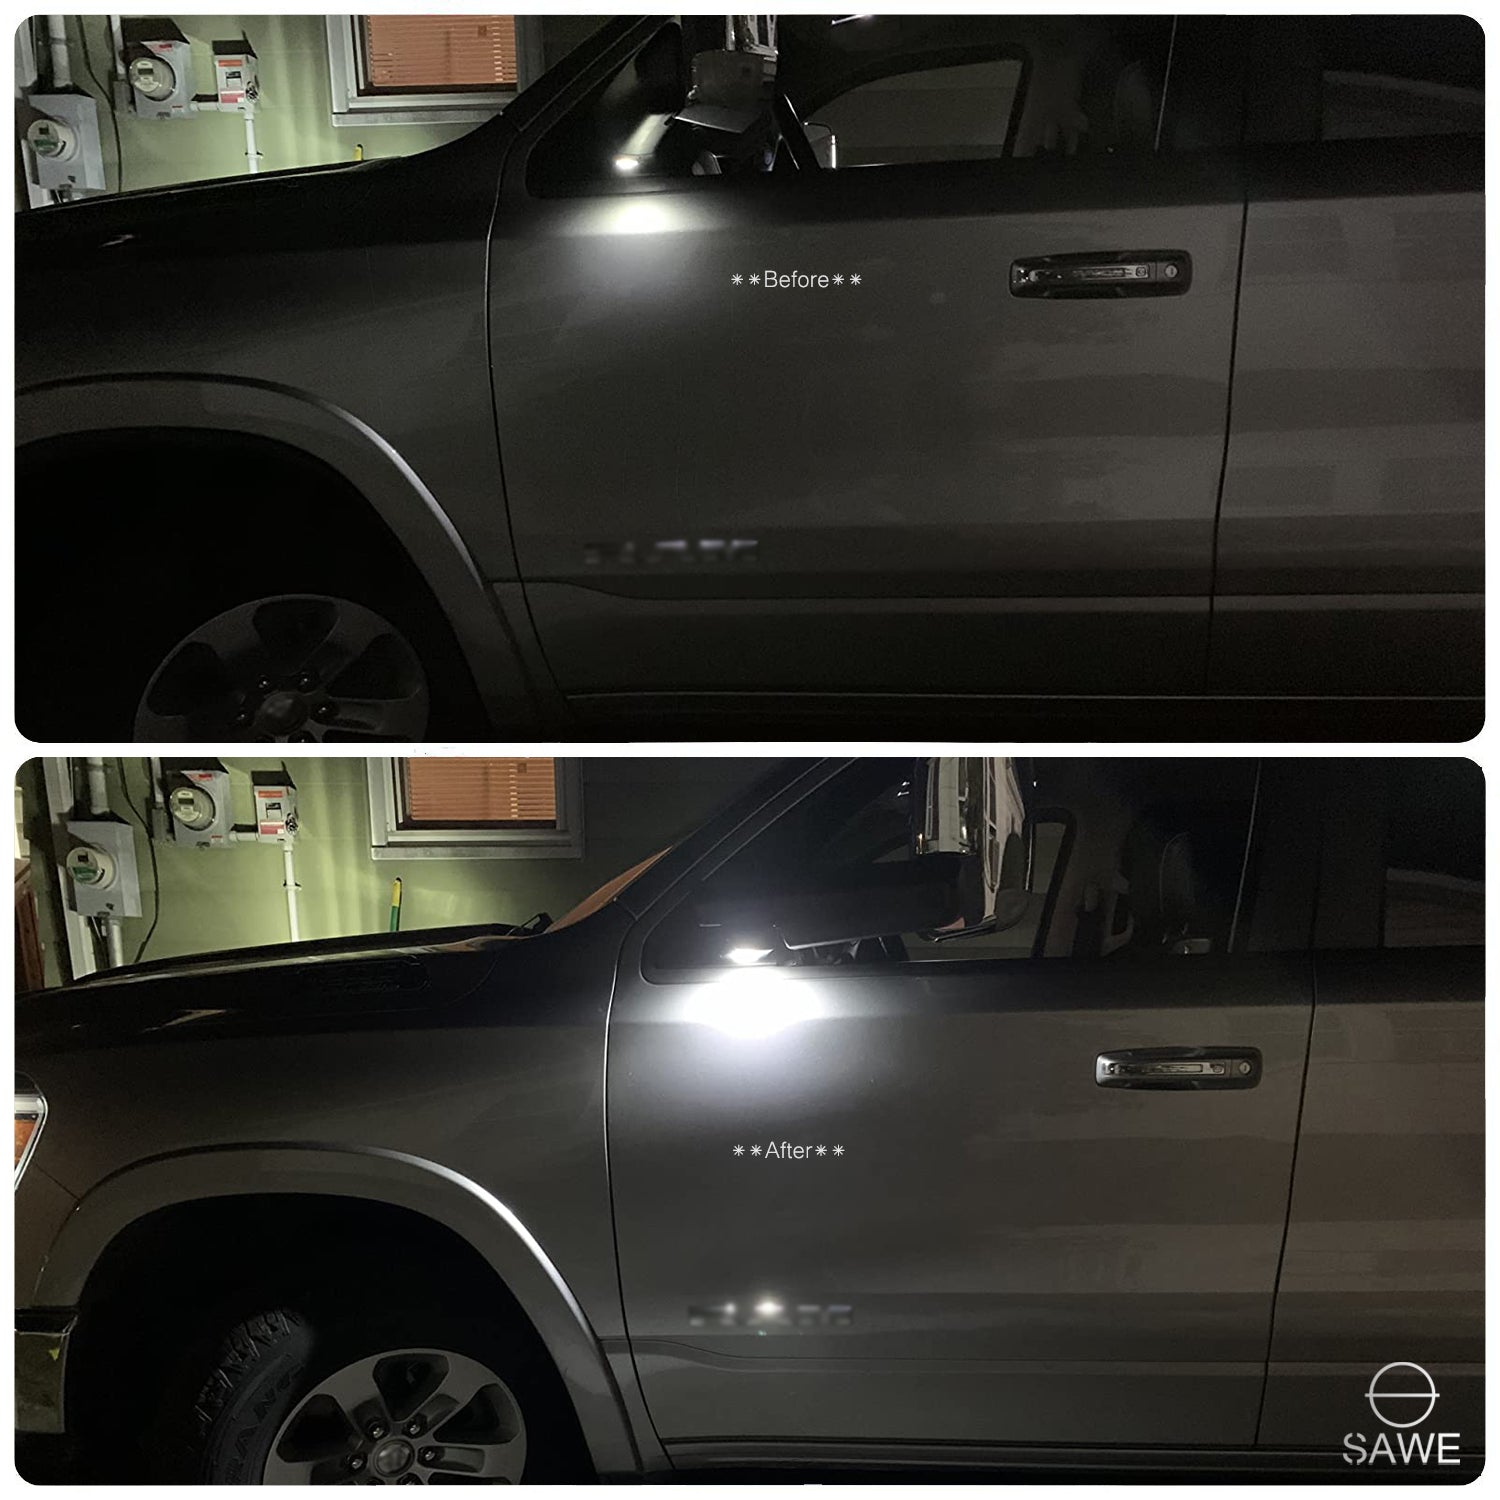 LED Under Side Mirror Puddle Light For 2010 - 2019 Dodge RAM 1500 2500 3500 4500 - White